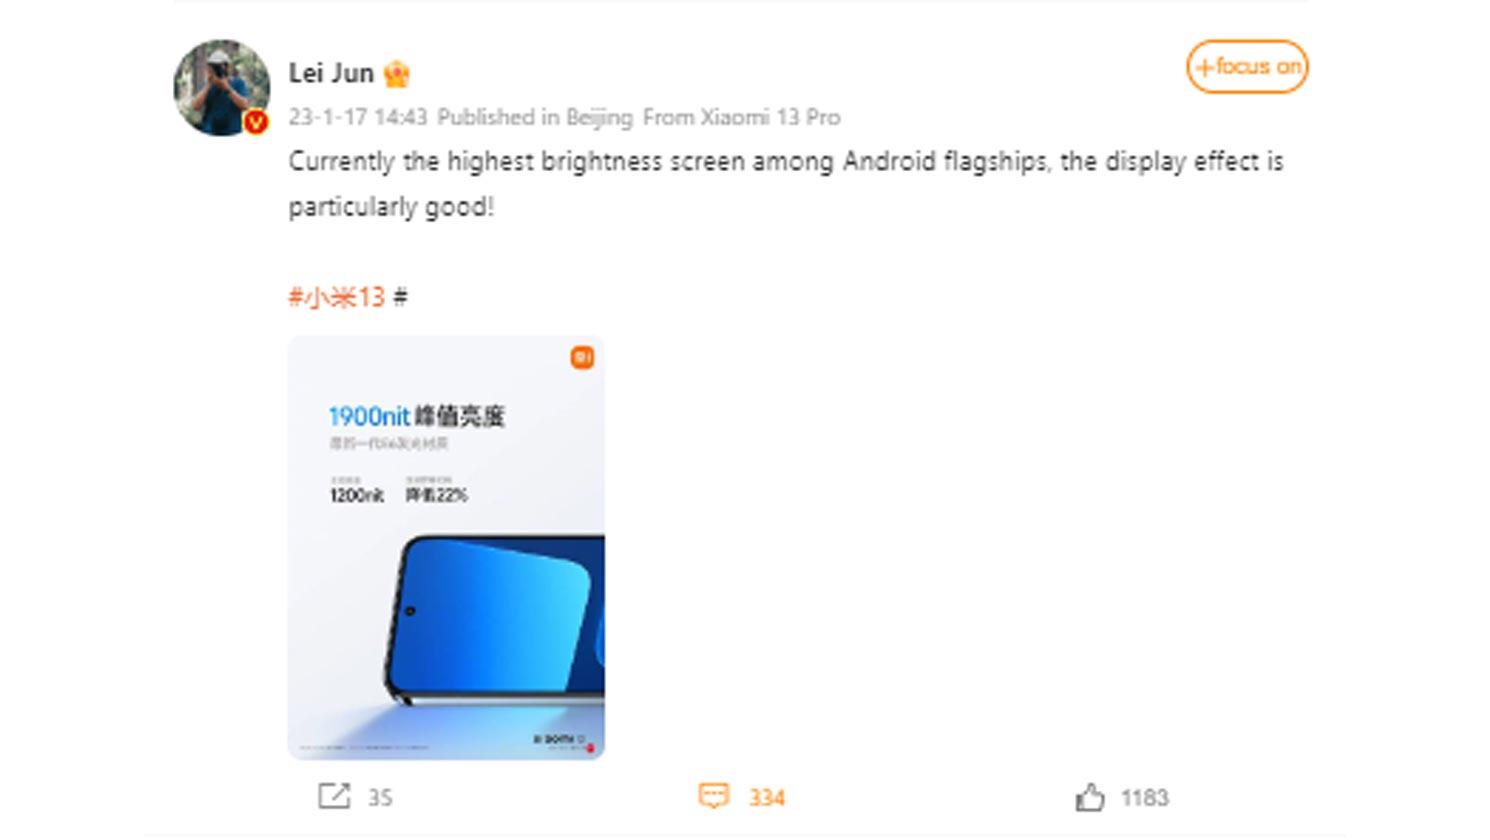 Xiaomi - Record 1900 nits